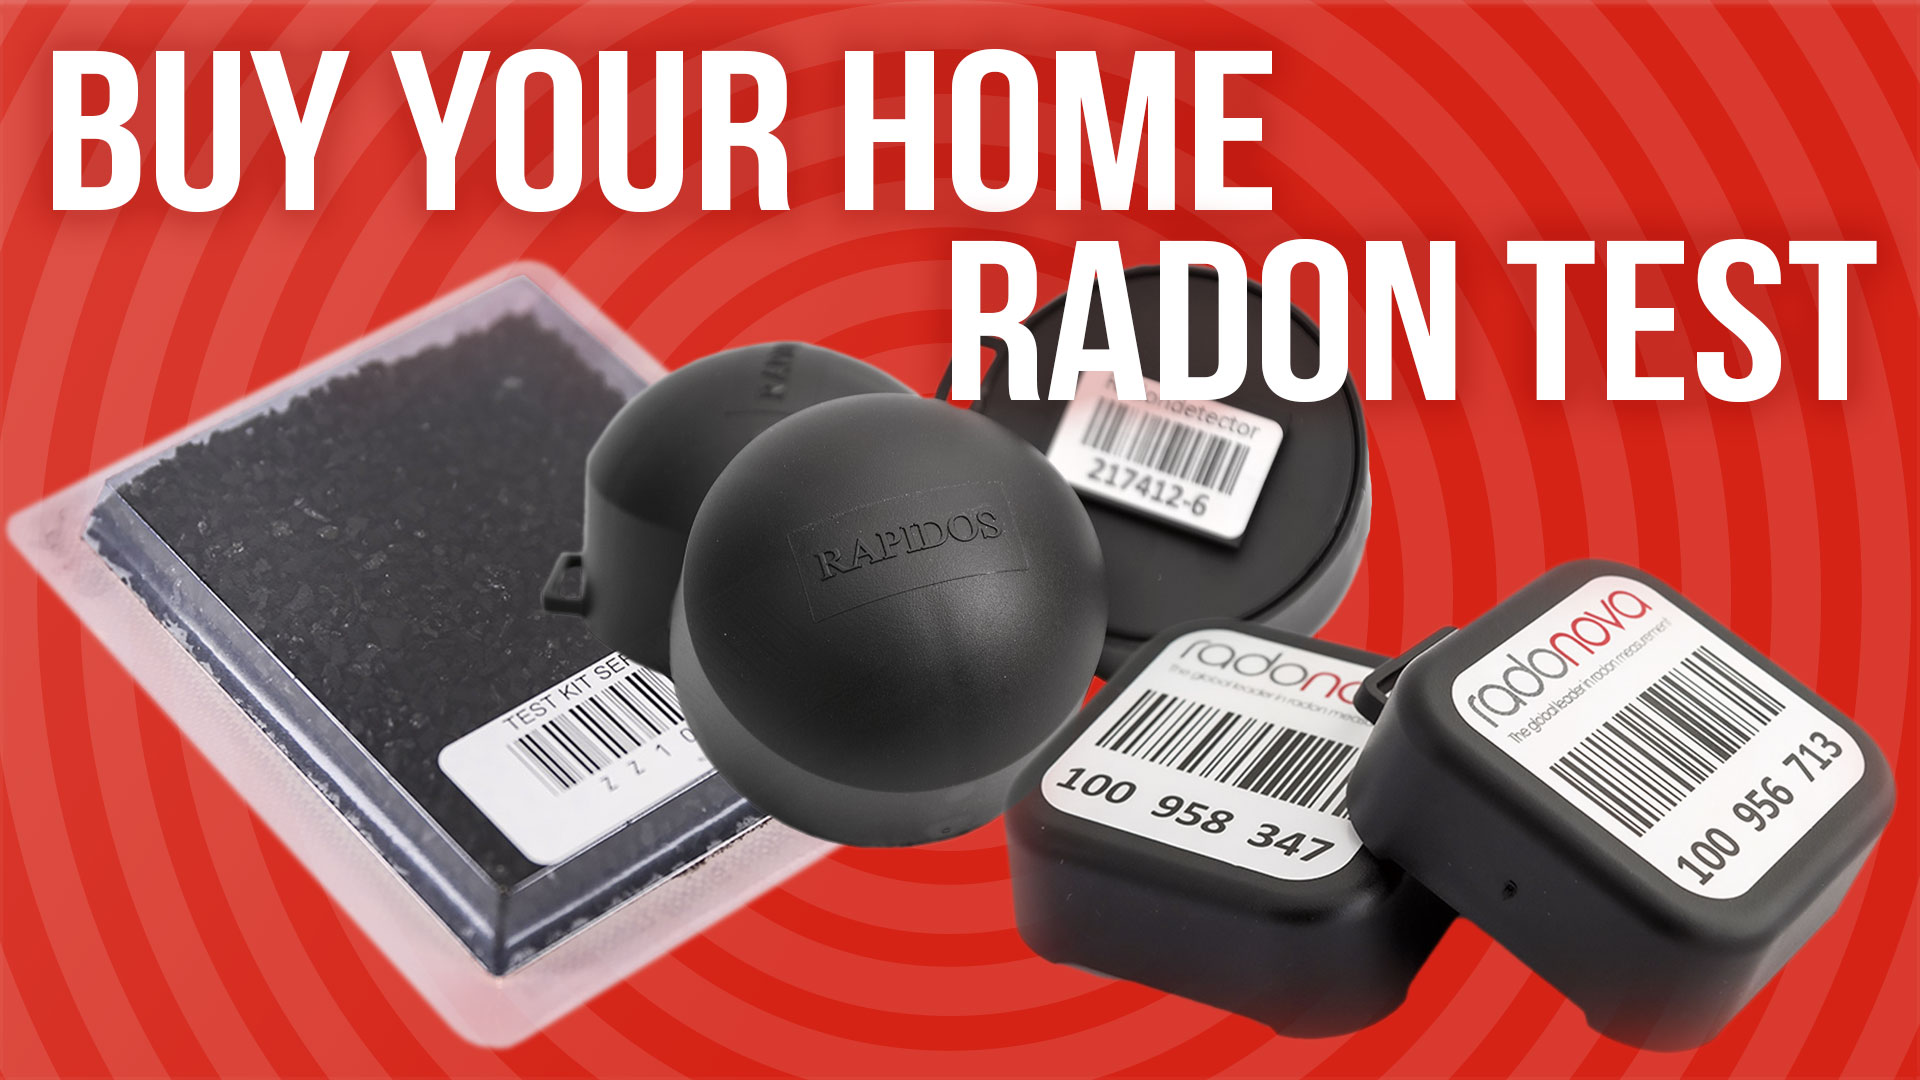 Radon Testing Home Kits Accurate